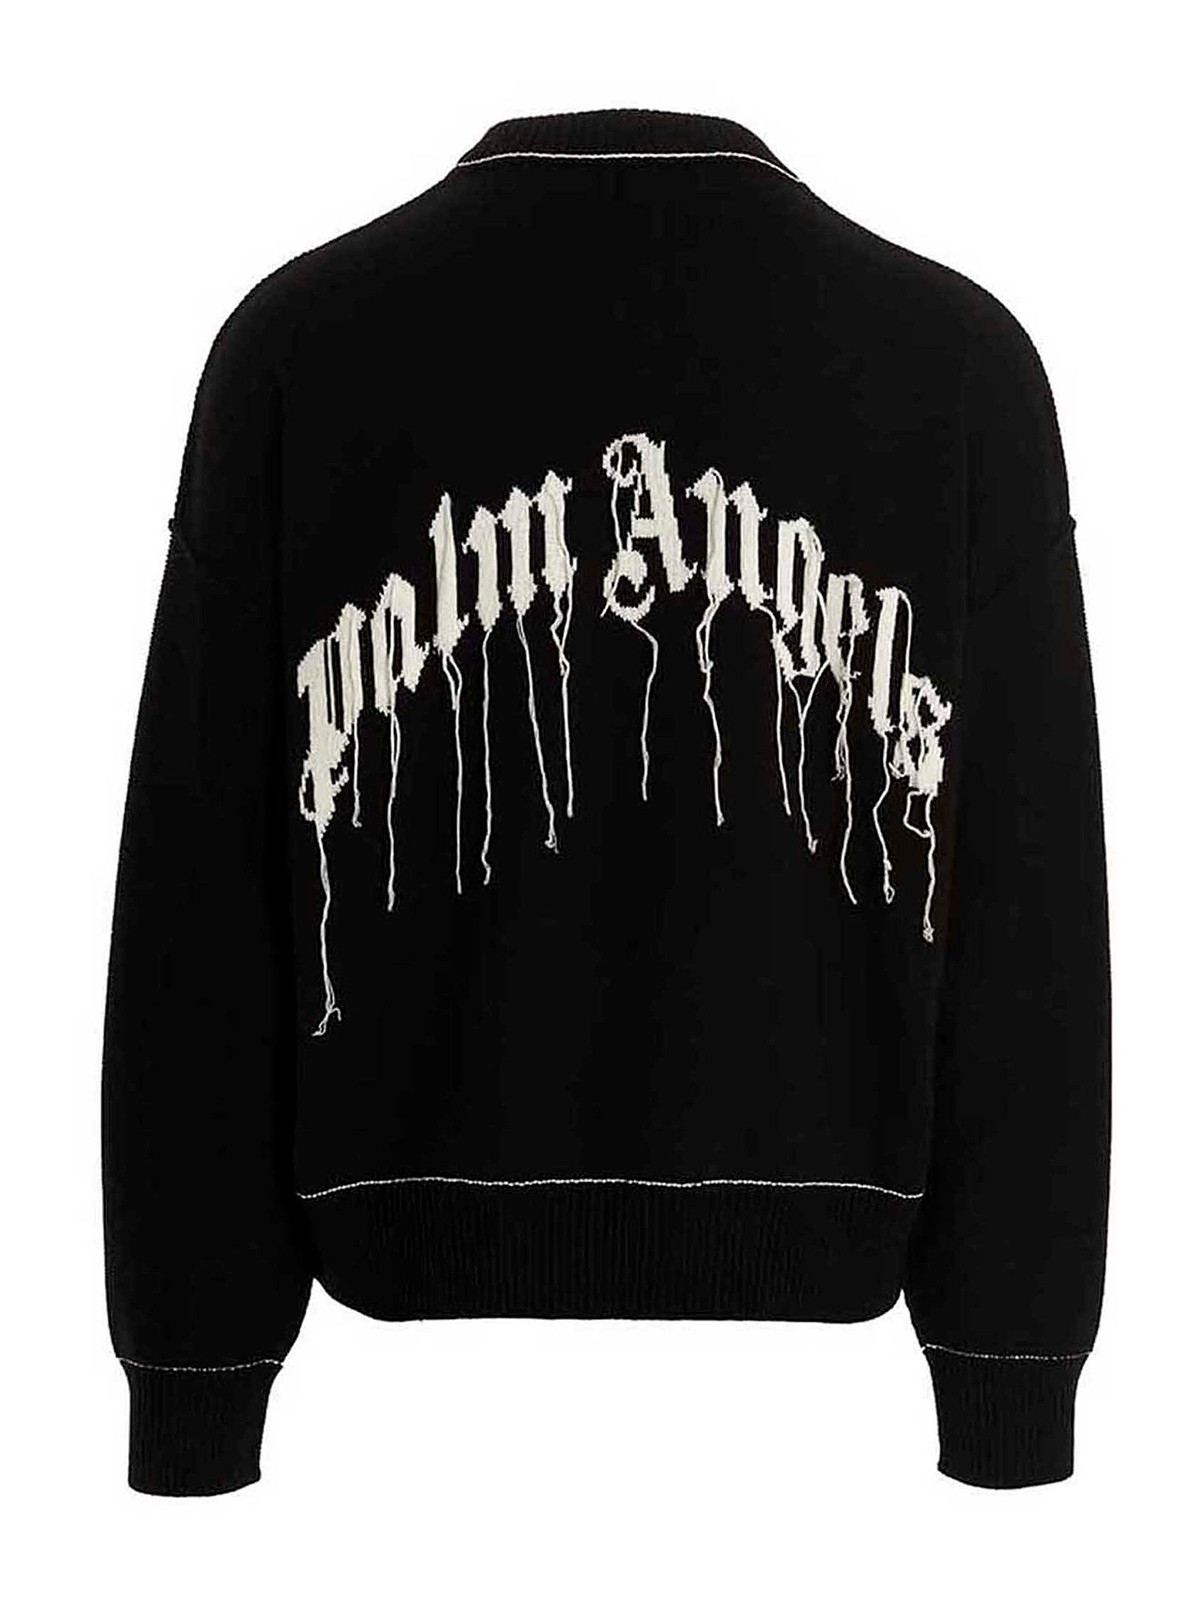 Shop Palm Angels Pa Shark Wool Sweater In Black